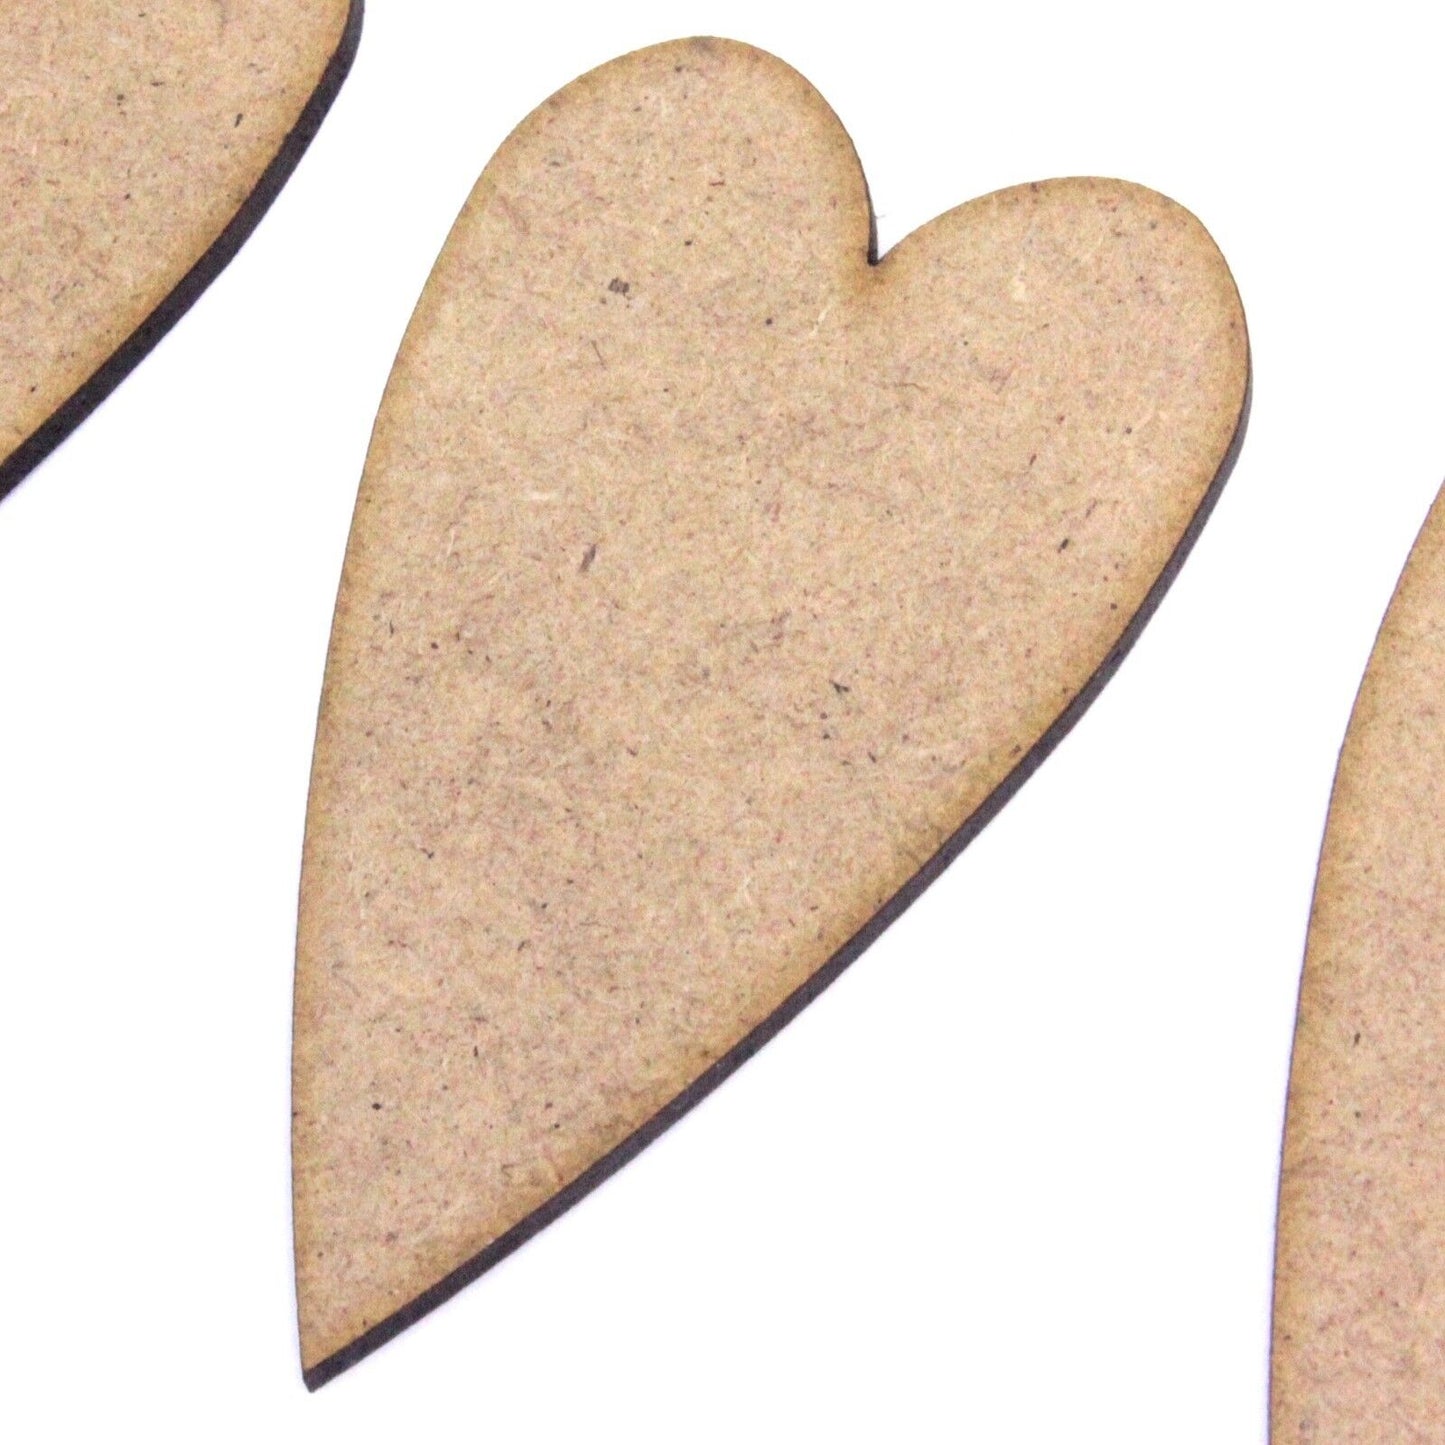 Long Heart Craft Shape, Various Sizes, 2mm MDF Wood. Elongated, Rustic,Primitive